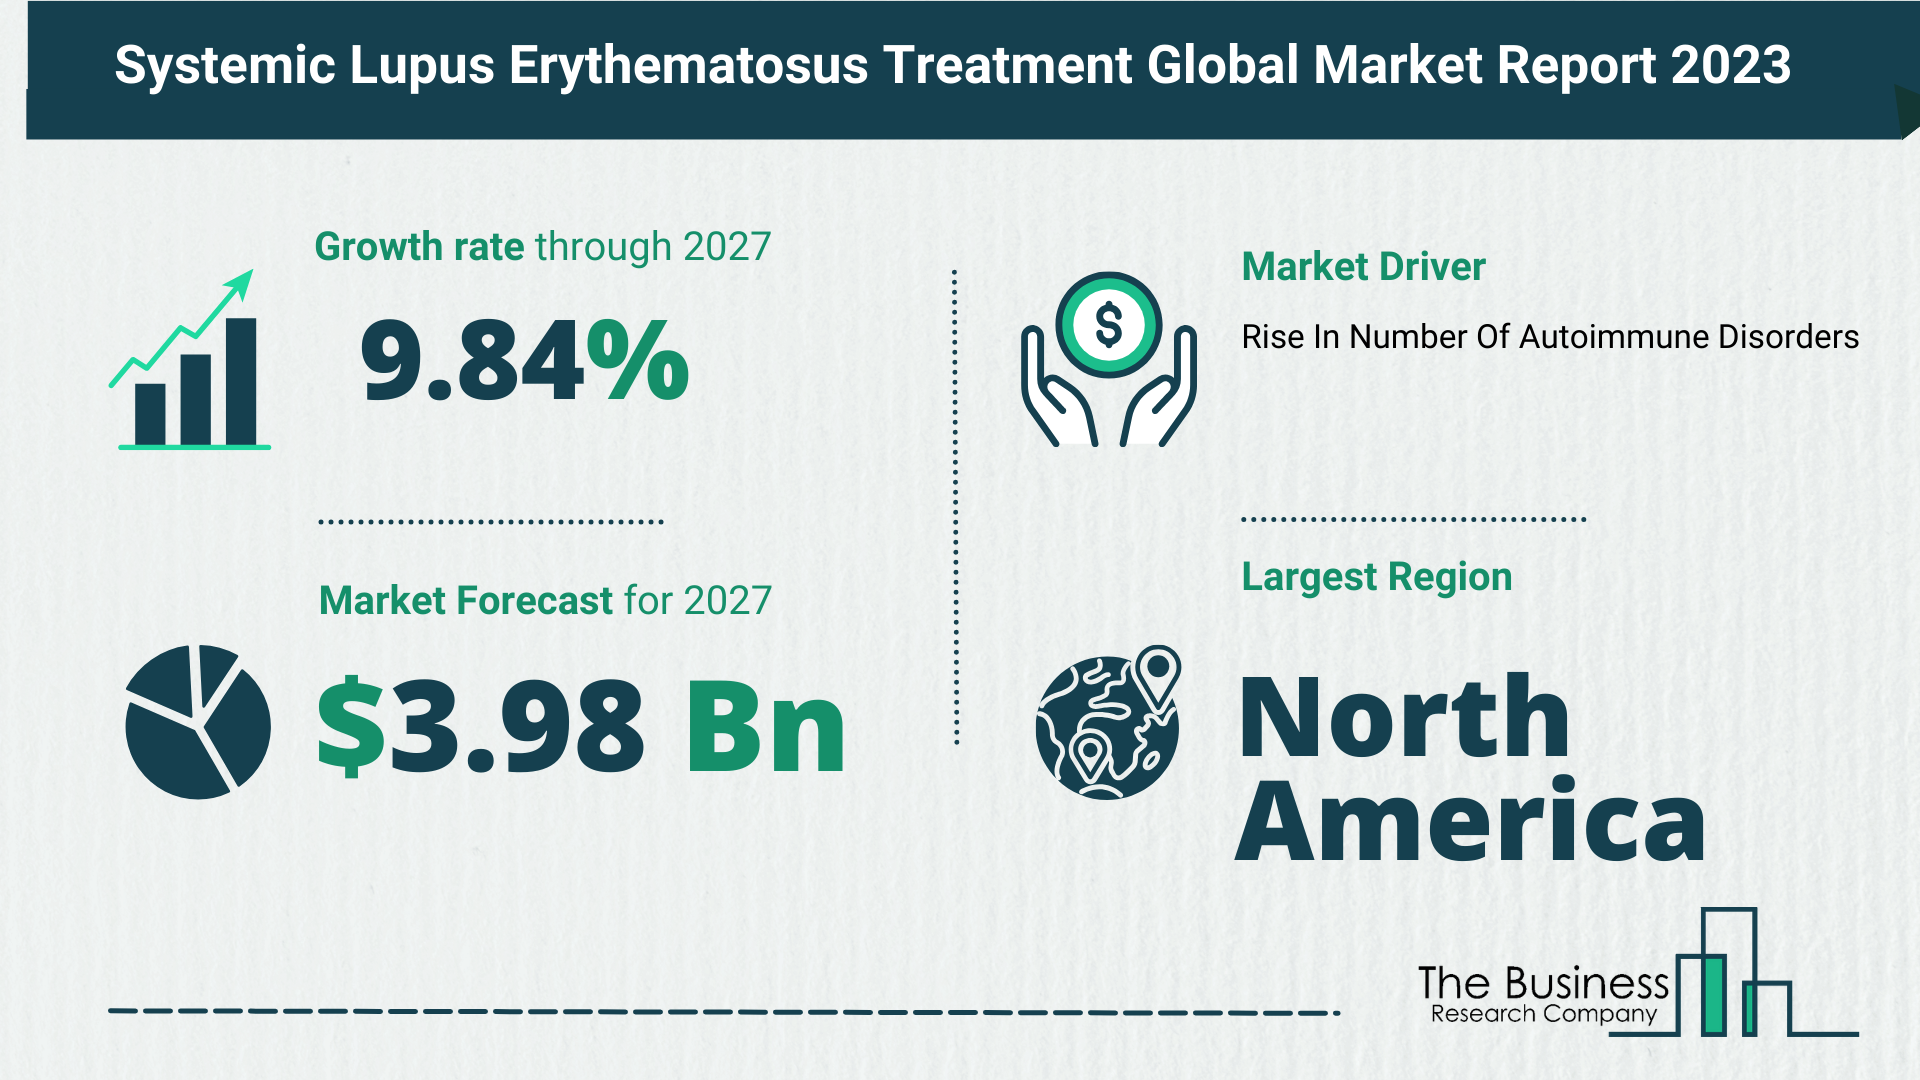 Global Systemic Lupus Erythematosus Treatment Market,